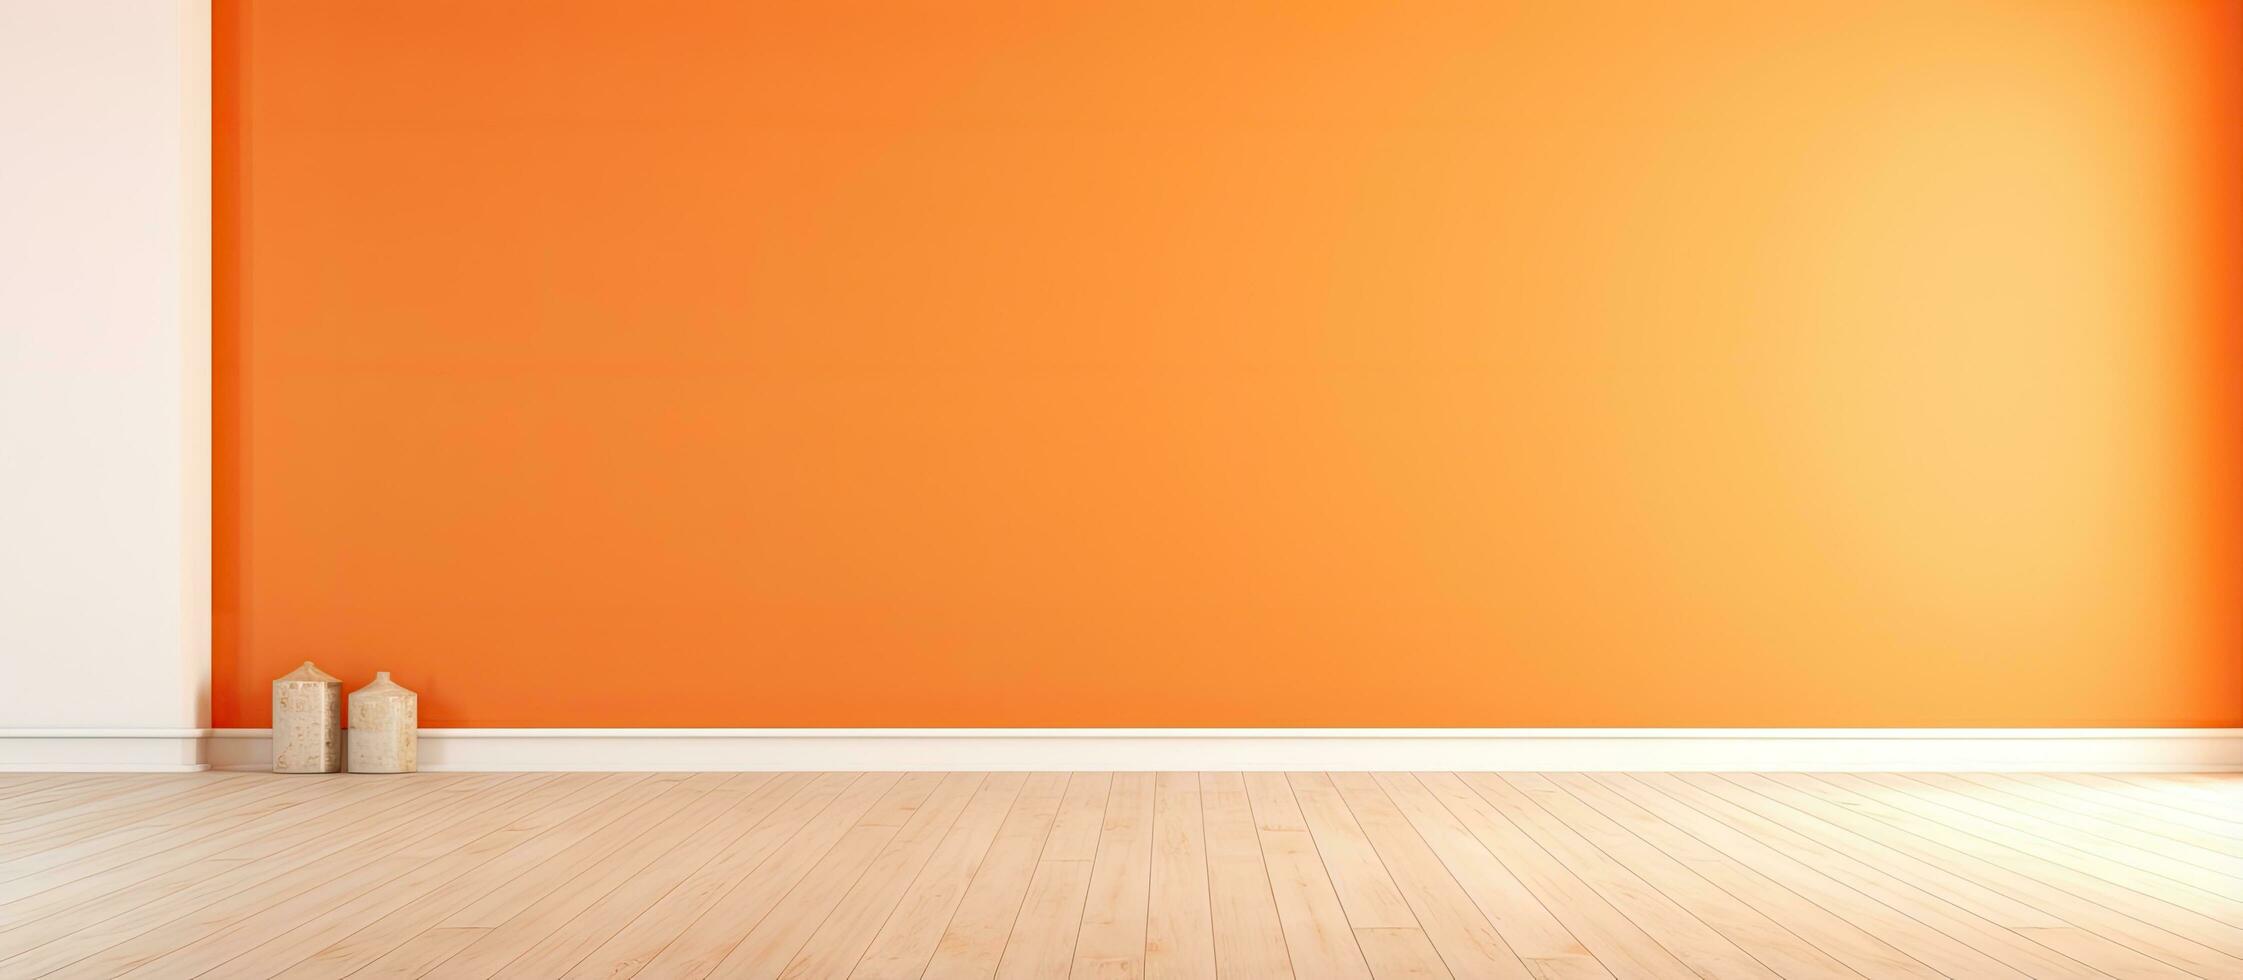 Minimalist interior design with painted wall wooden floor empty room illustration photo